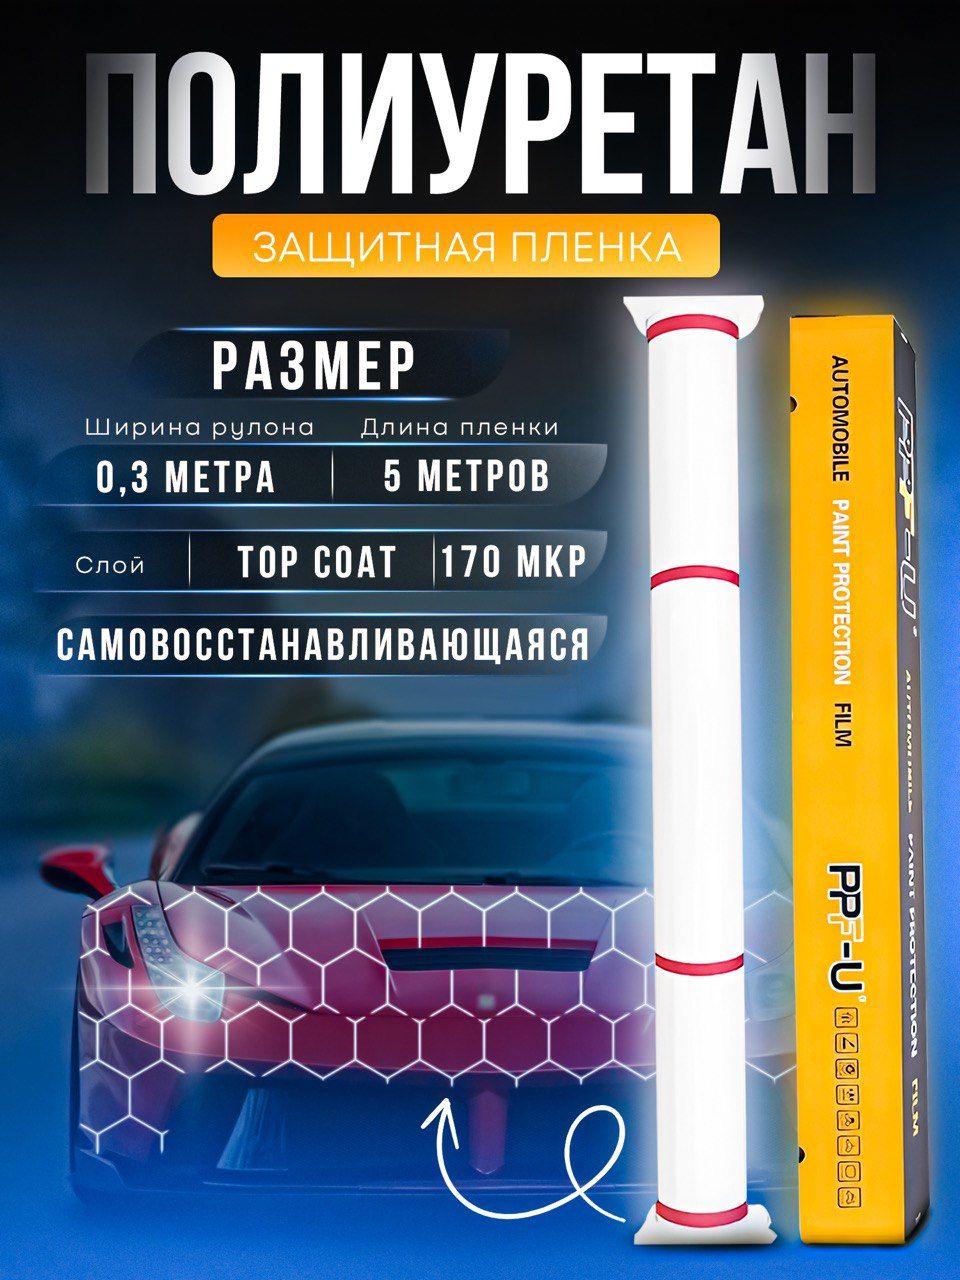 Защитная пленка PPH-U 0.3*5 м, для авто, полиуретан